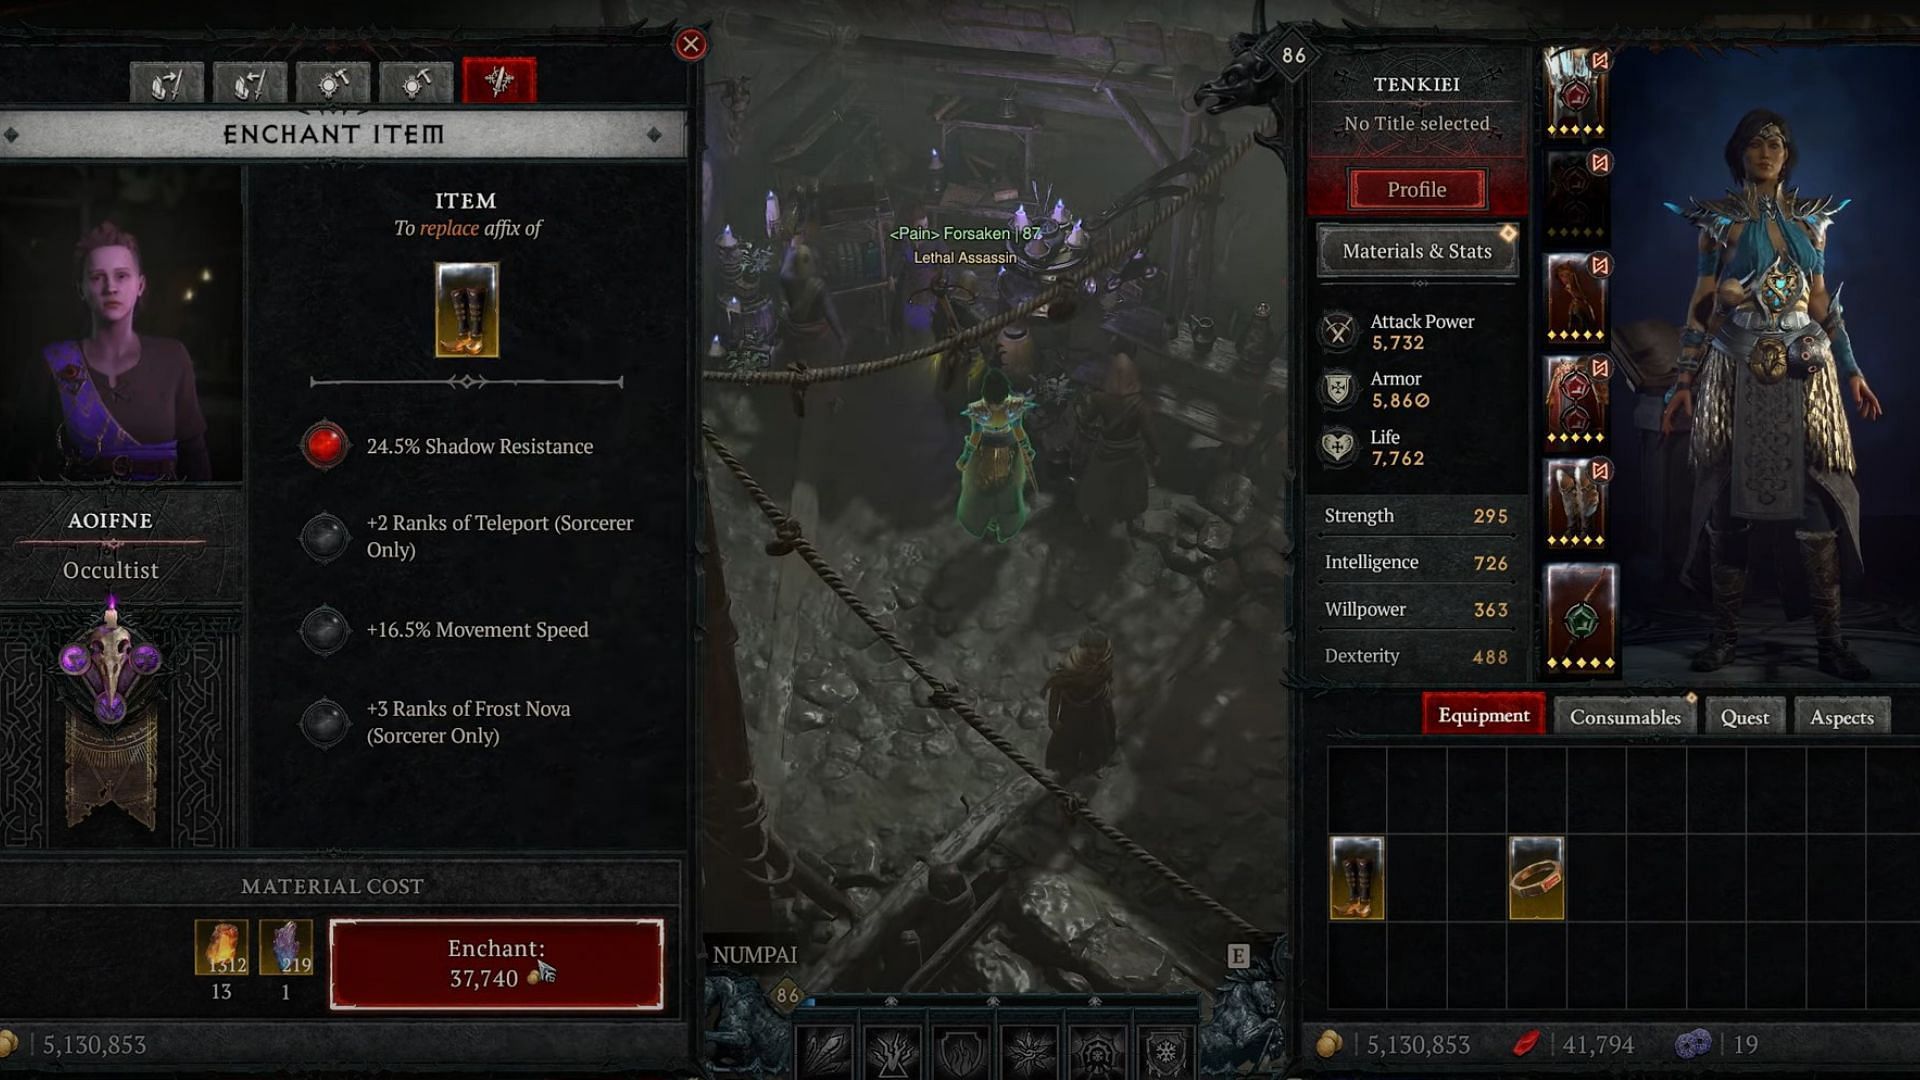 Enchanting items in Diablo 4 (Image via Blizzard Entertainment)